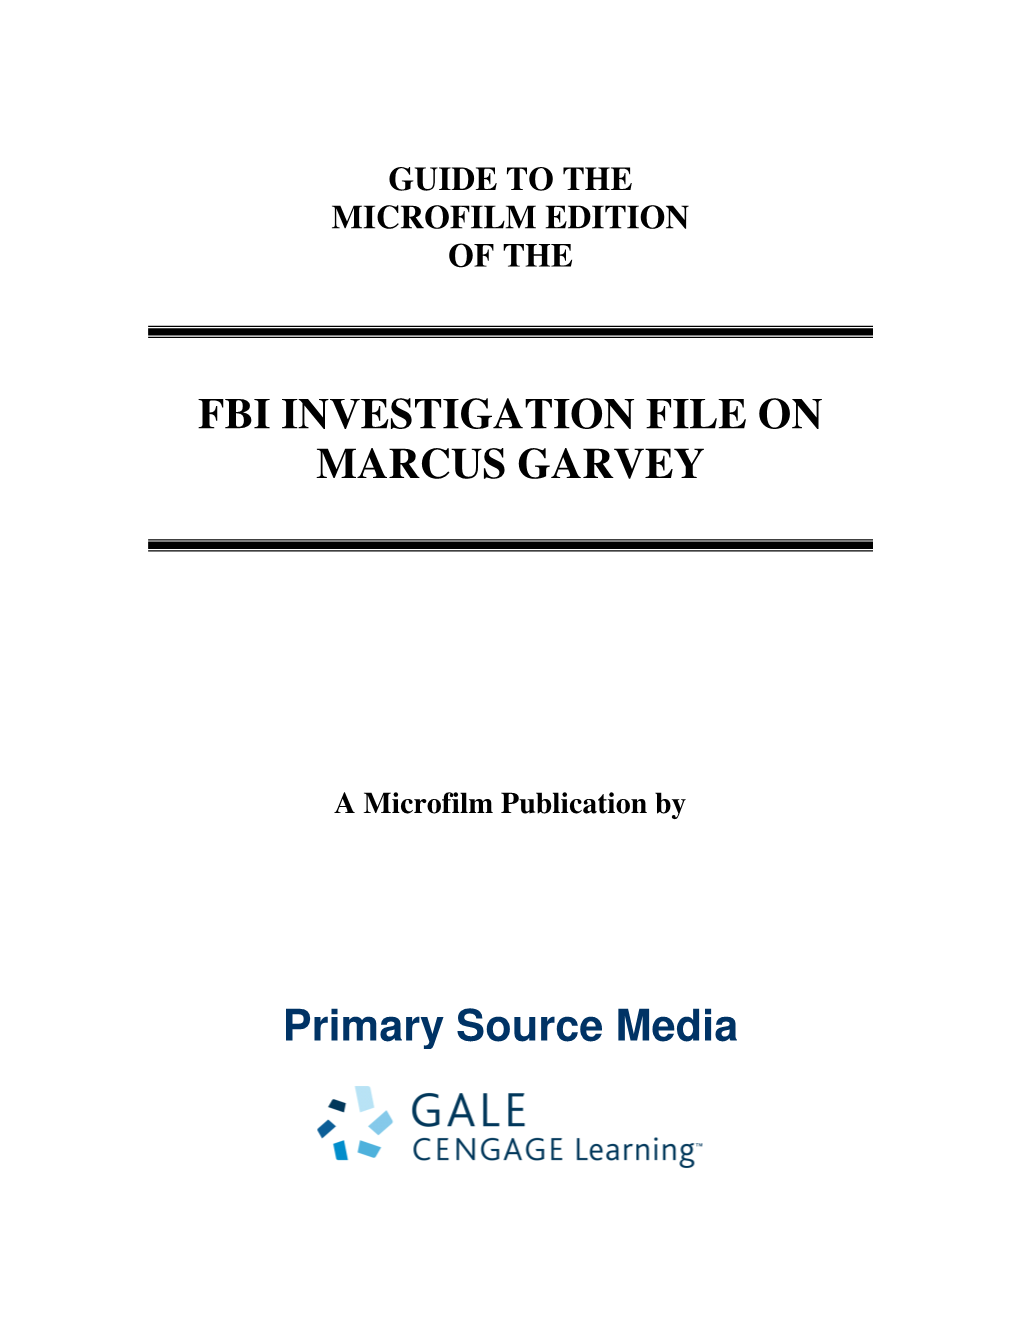 FBI INVESTIGATION FILE on MARCUS GARVEY Primary Source Media